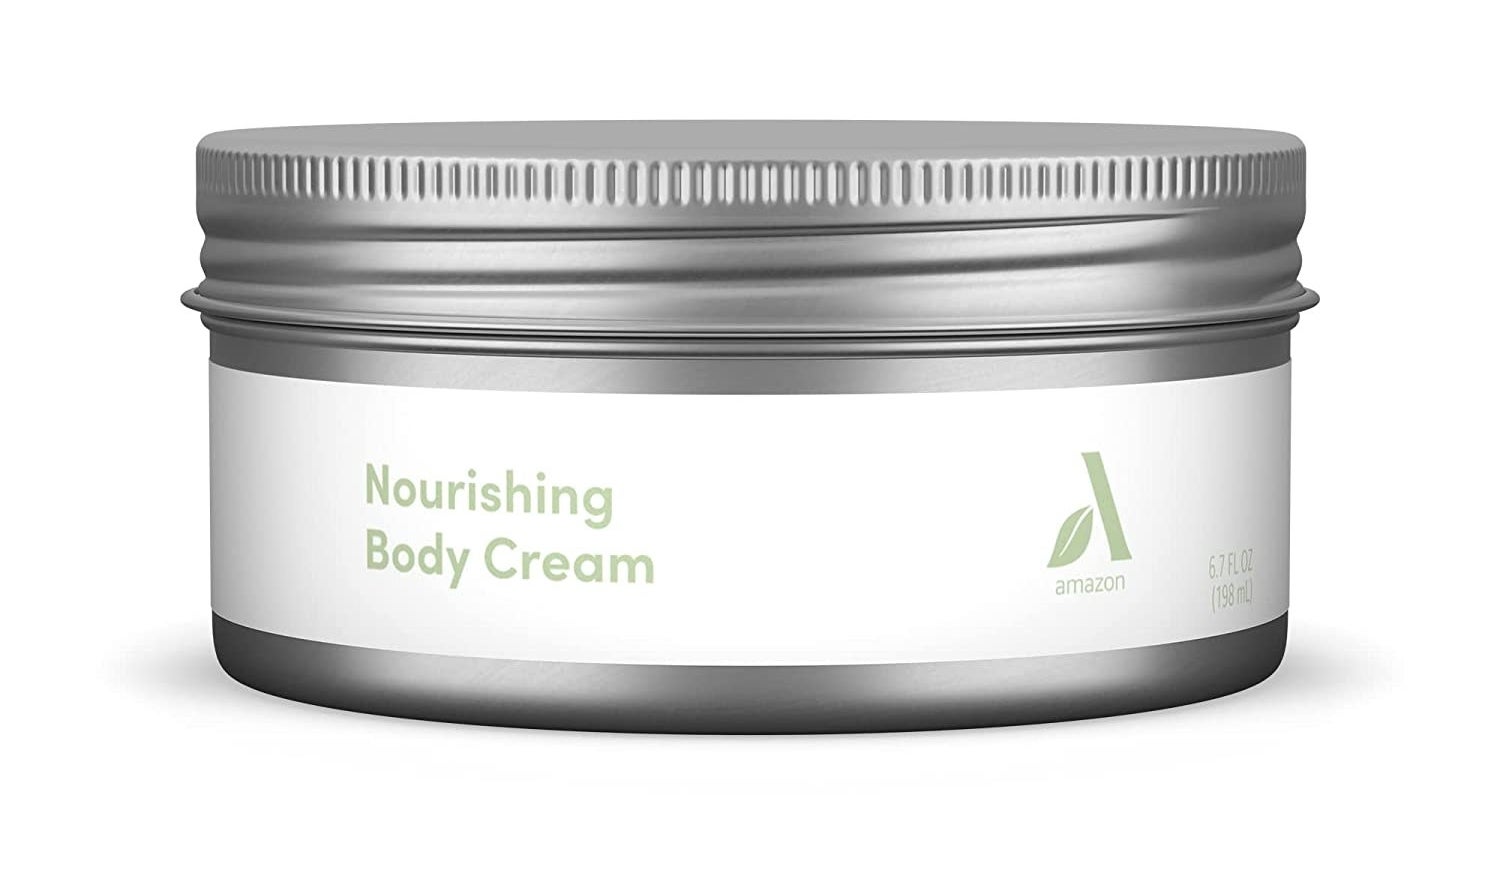 a closed jar of body cream with an aluminum cap